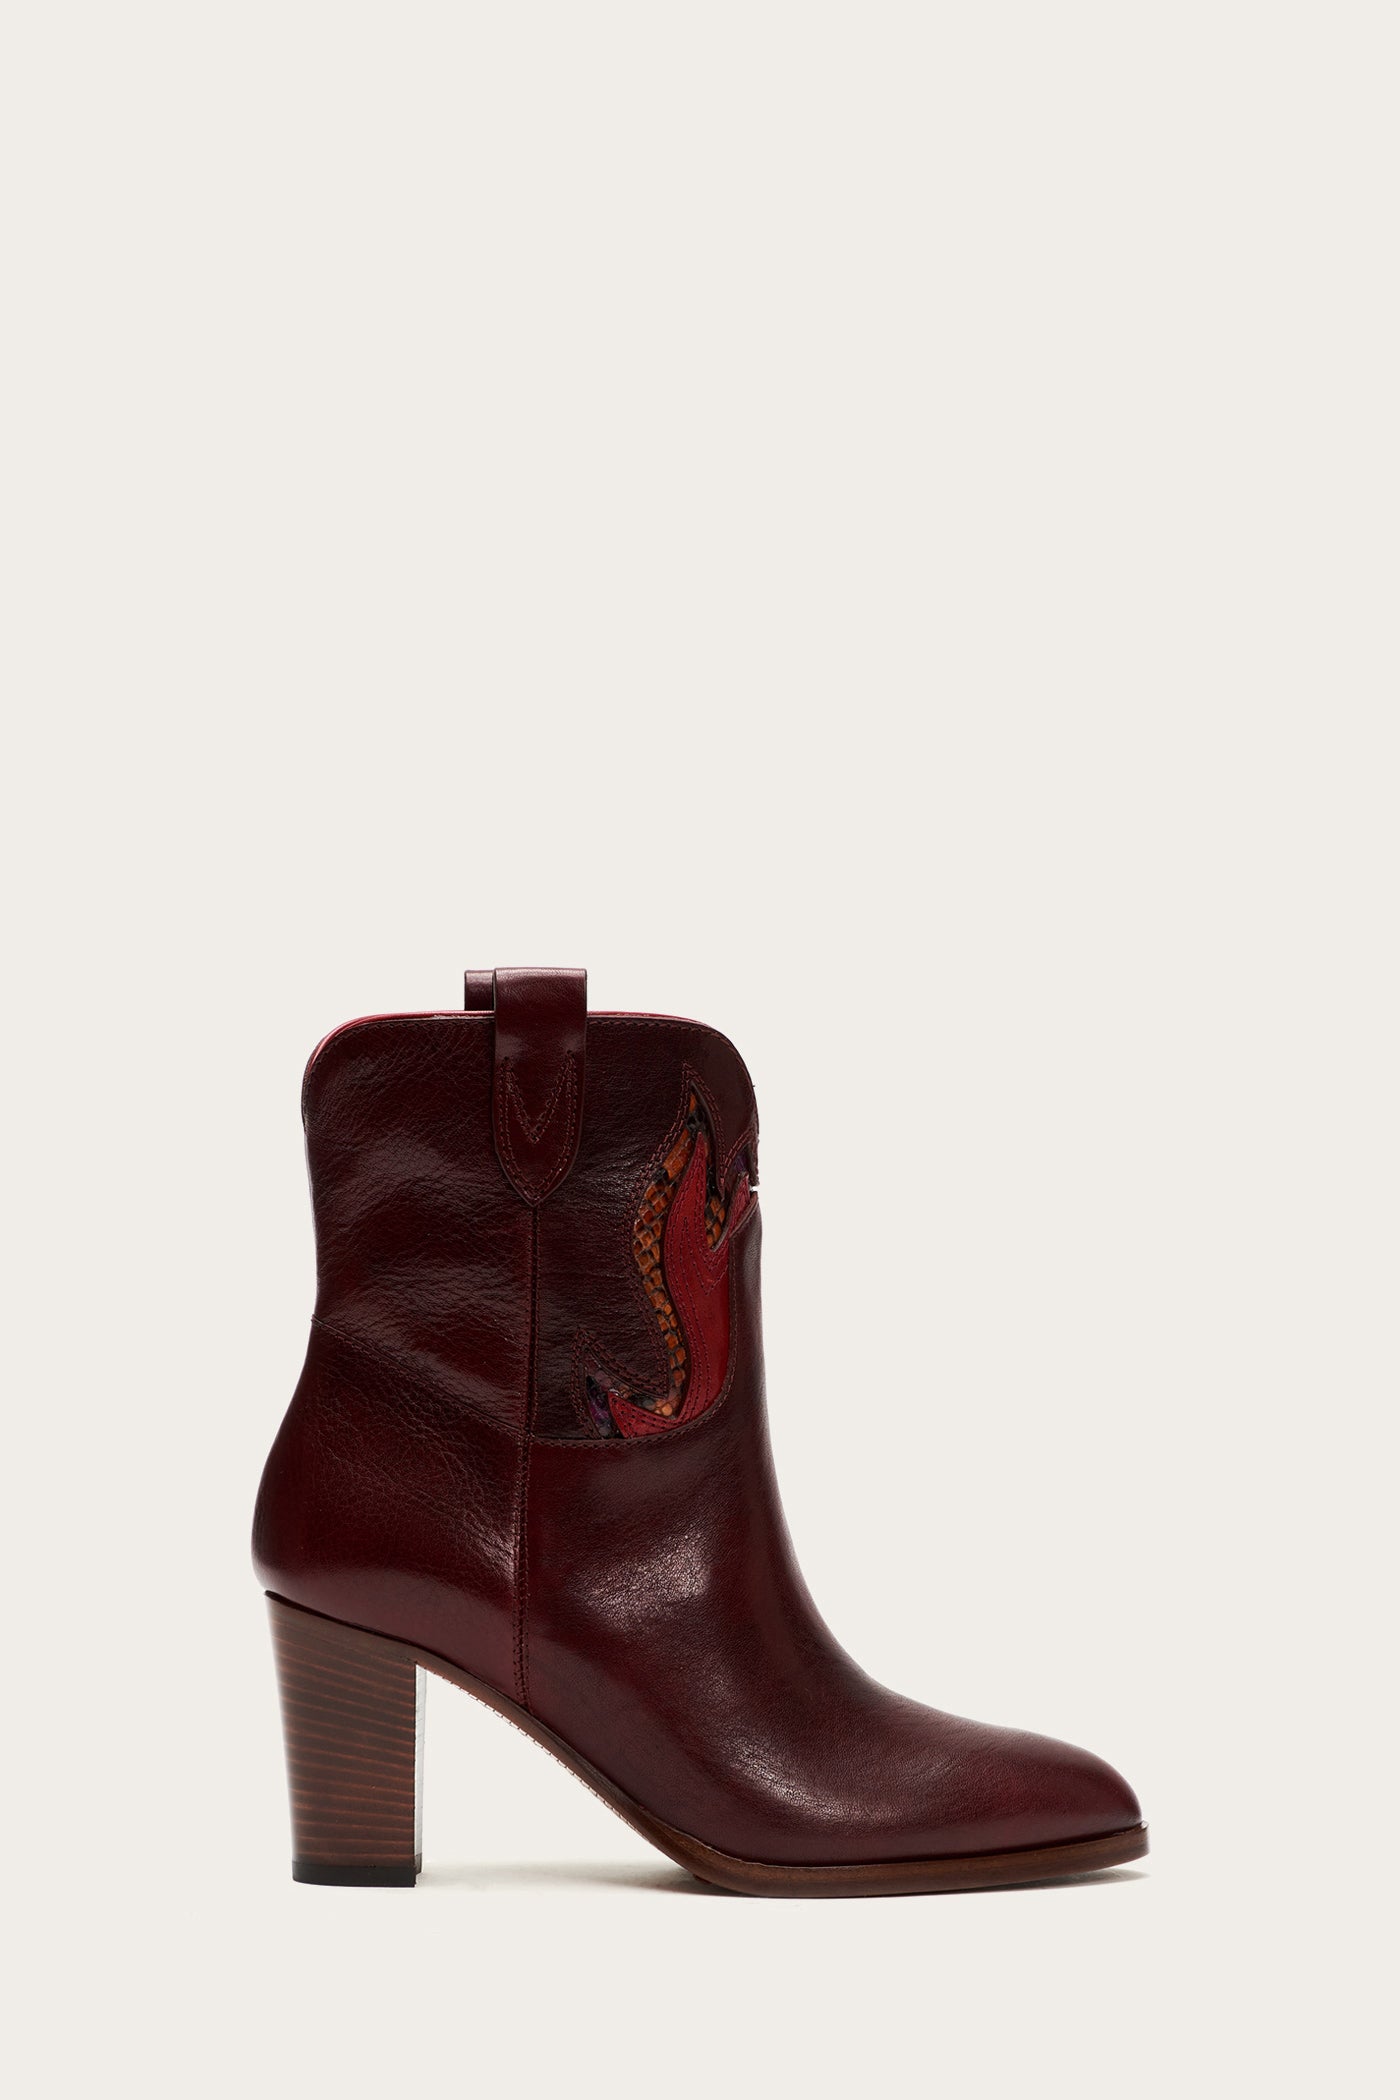 frye casey chelsea boots